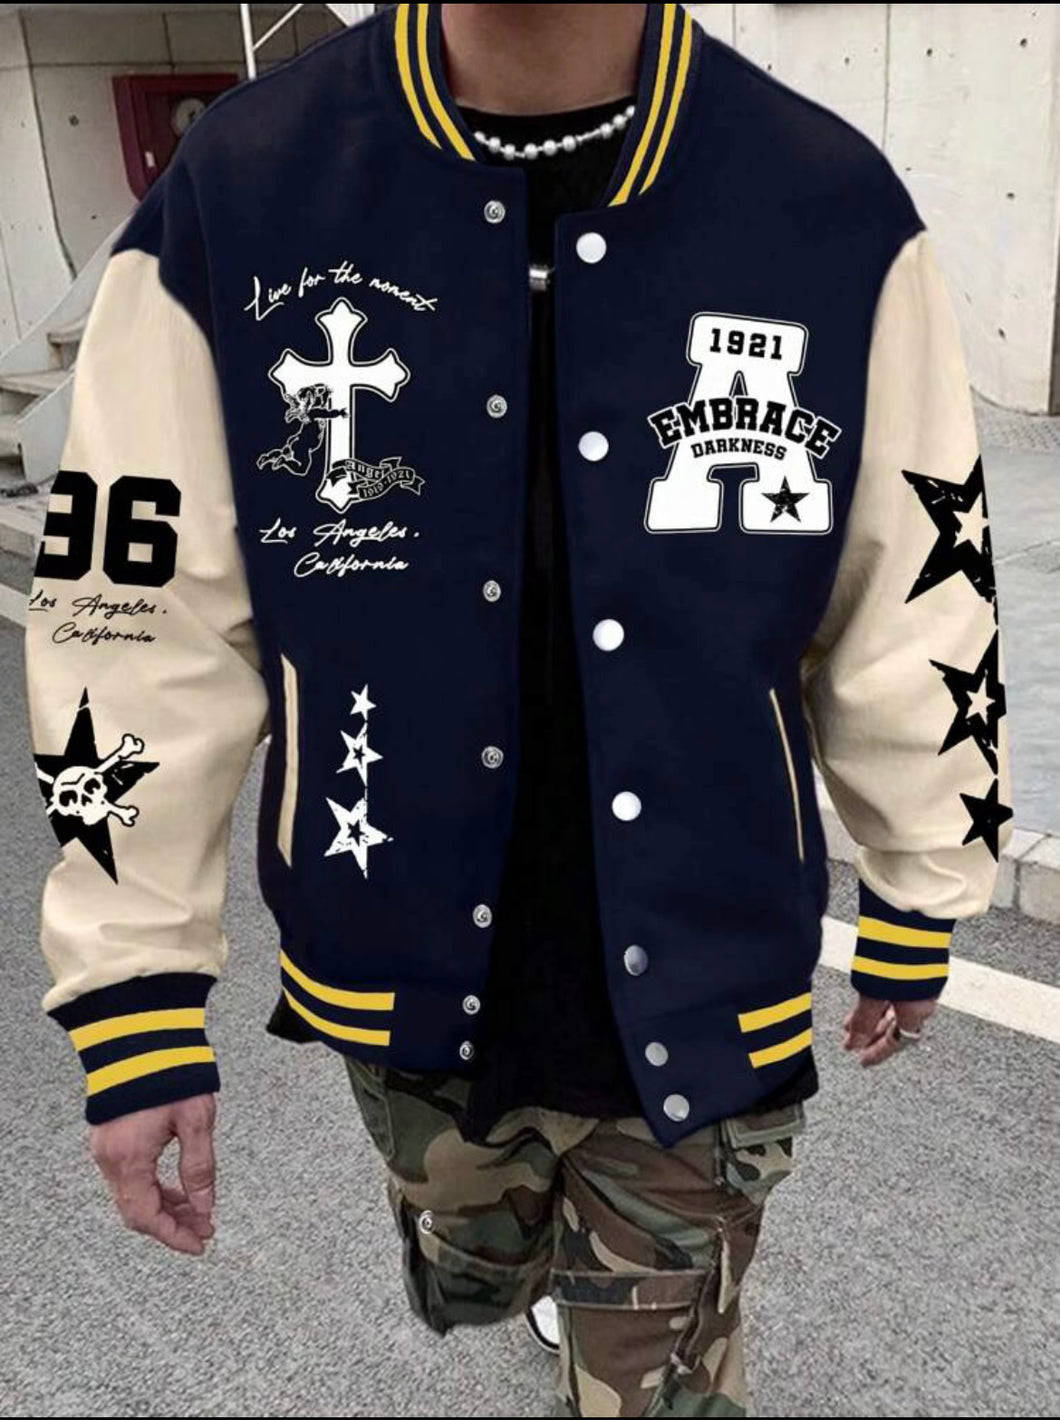 All star varsity jacket